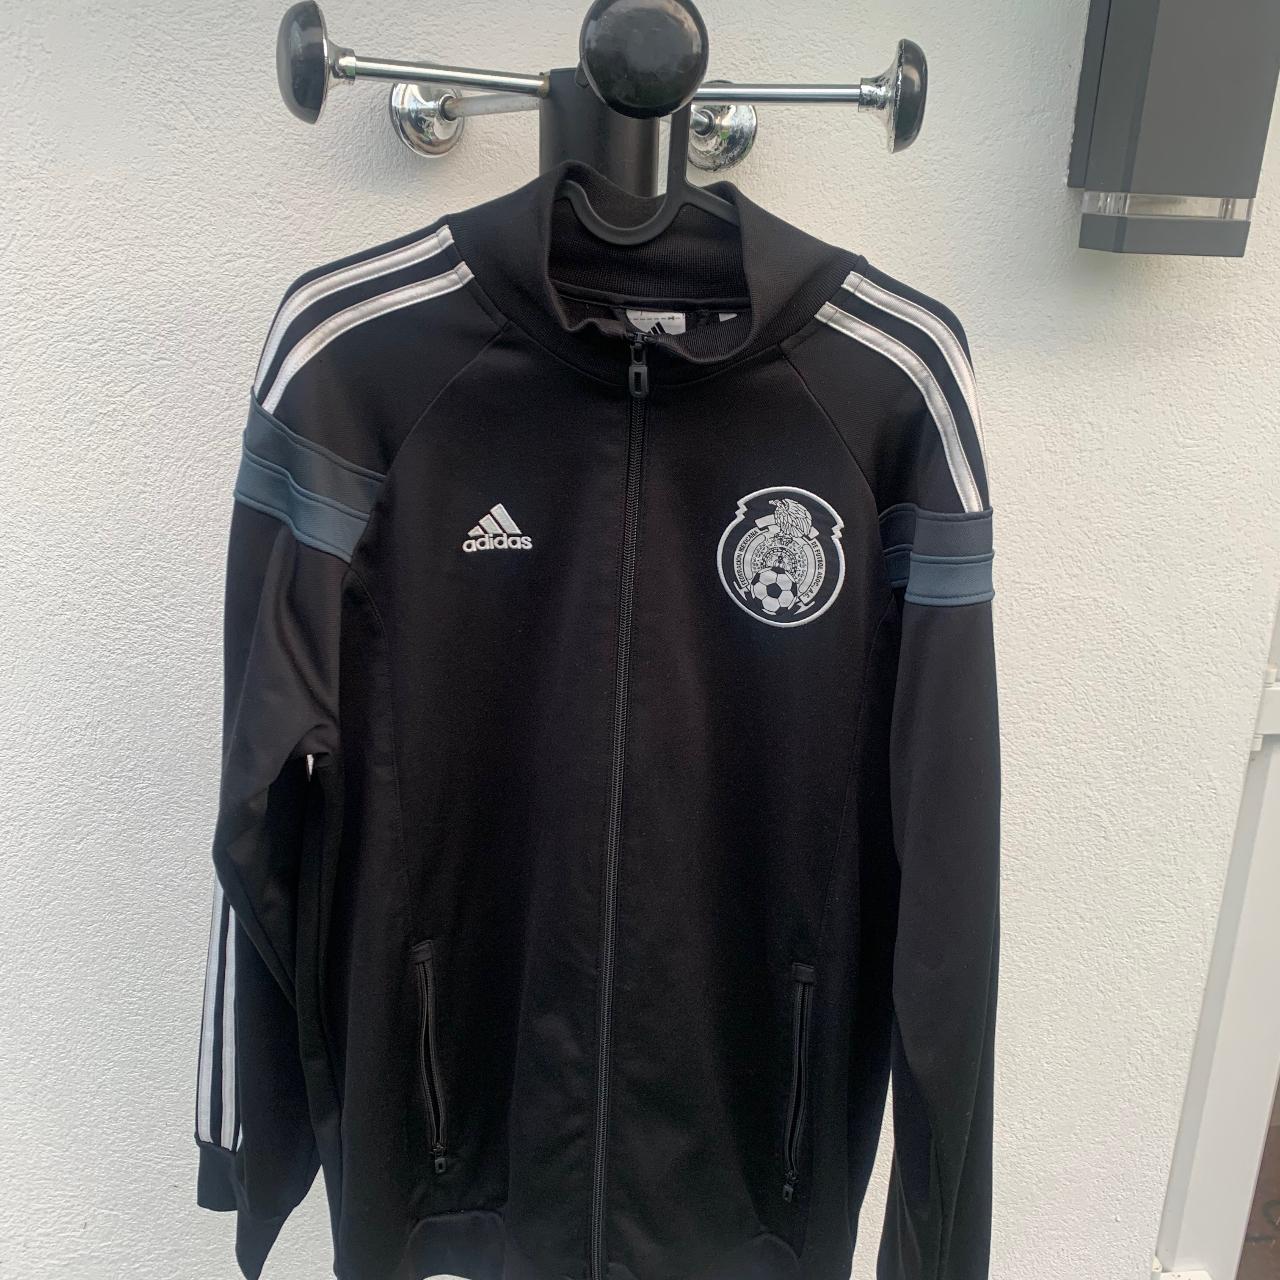 Adidas Mexico National Team Soccer Jacket in black... - Depop